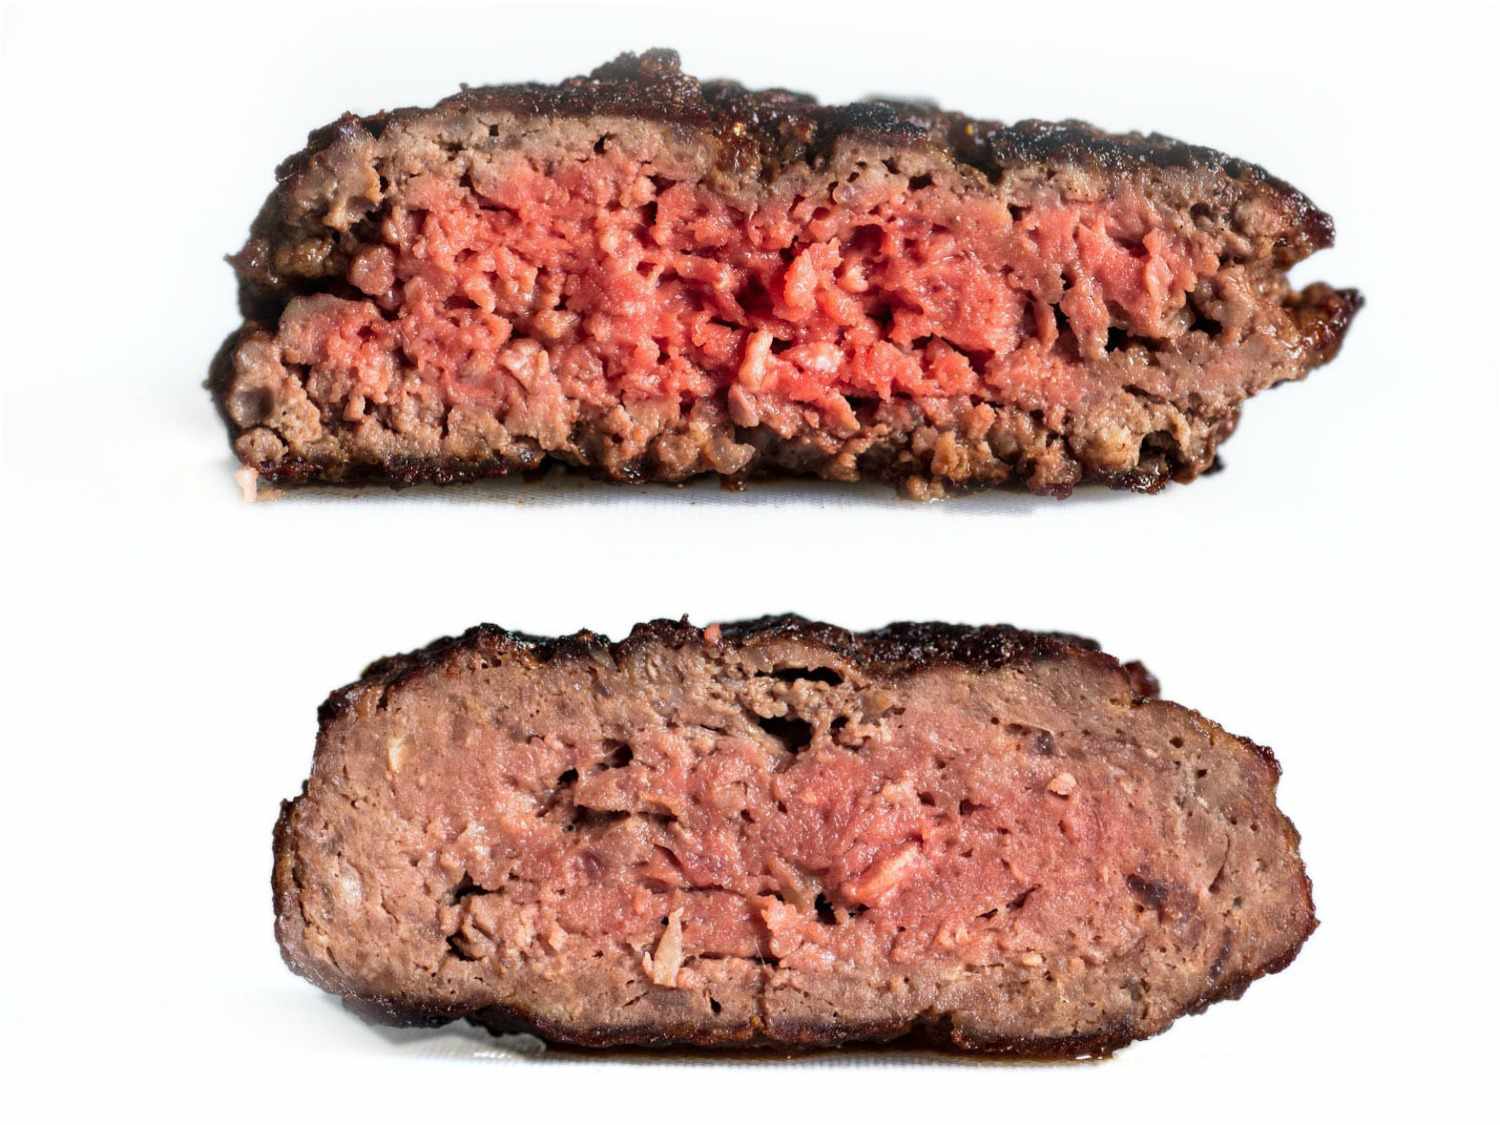 burgers-side-by-side.jpg